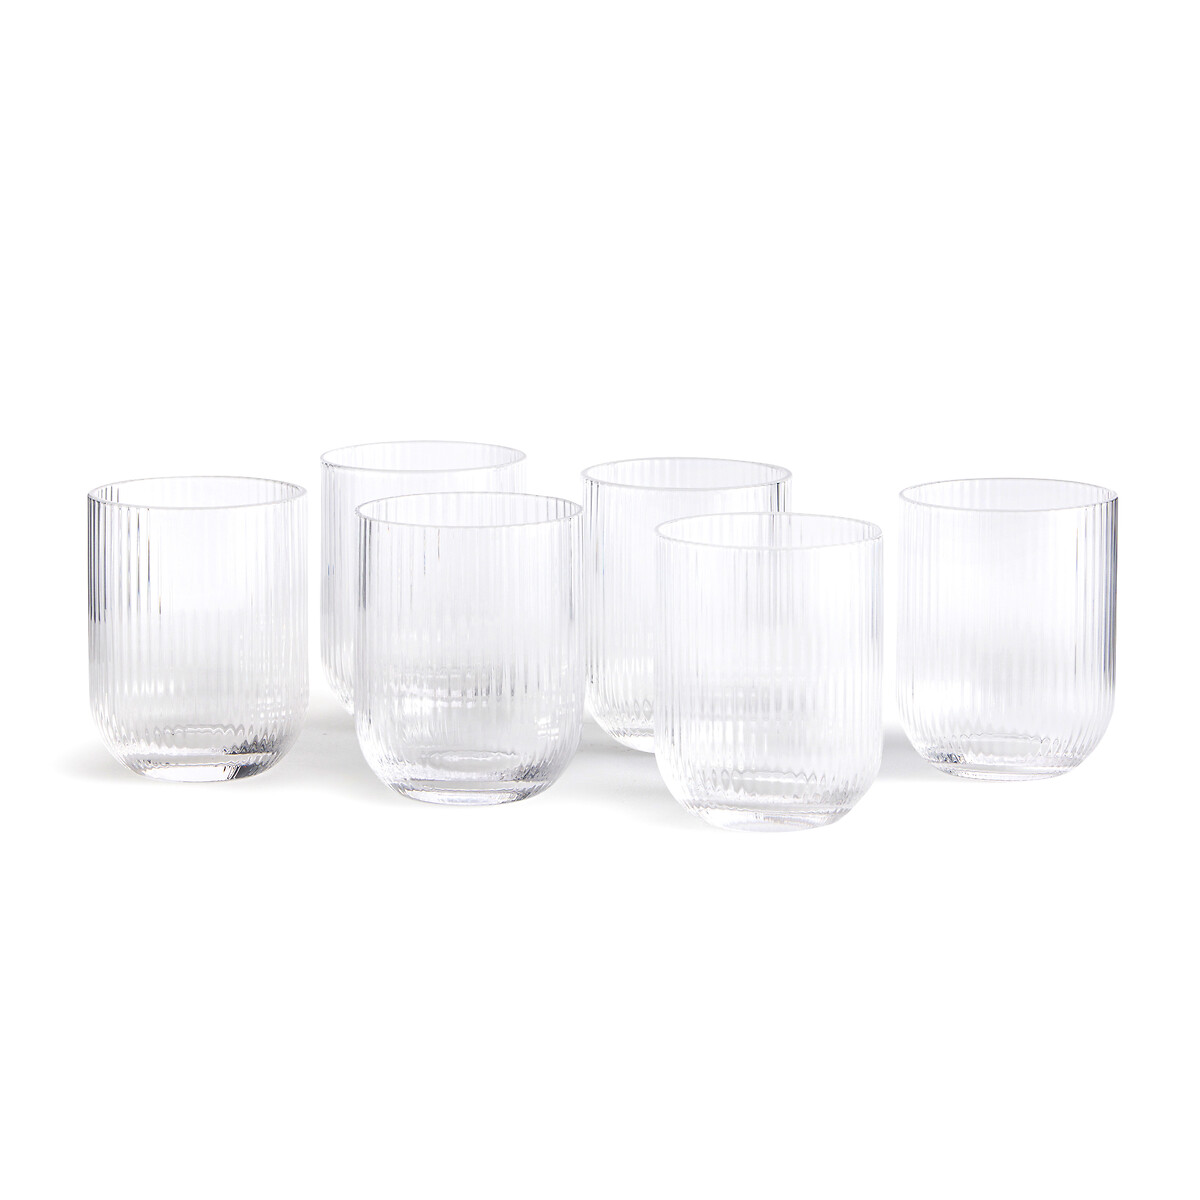 Set of 6 Ostri Textured Tumbler Glasses